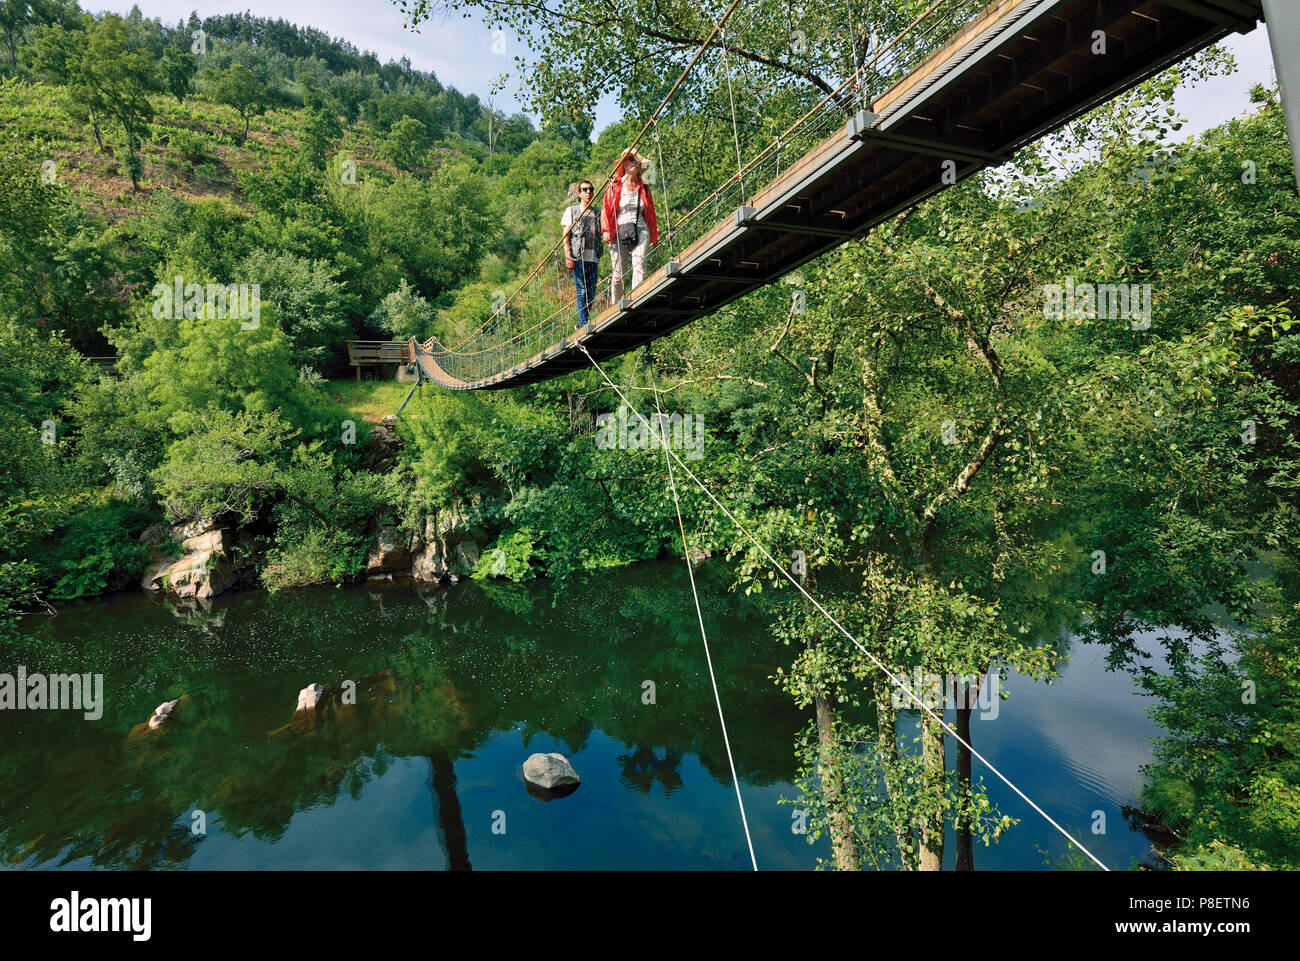 Woman and man crossing suspension bridge over river Stock Photo